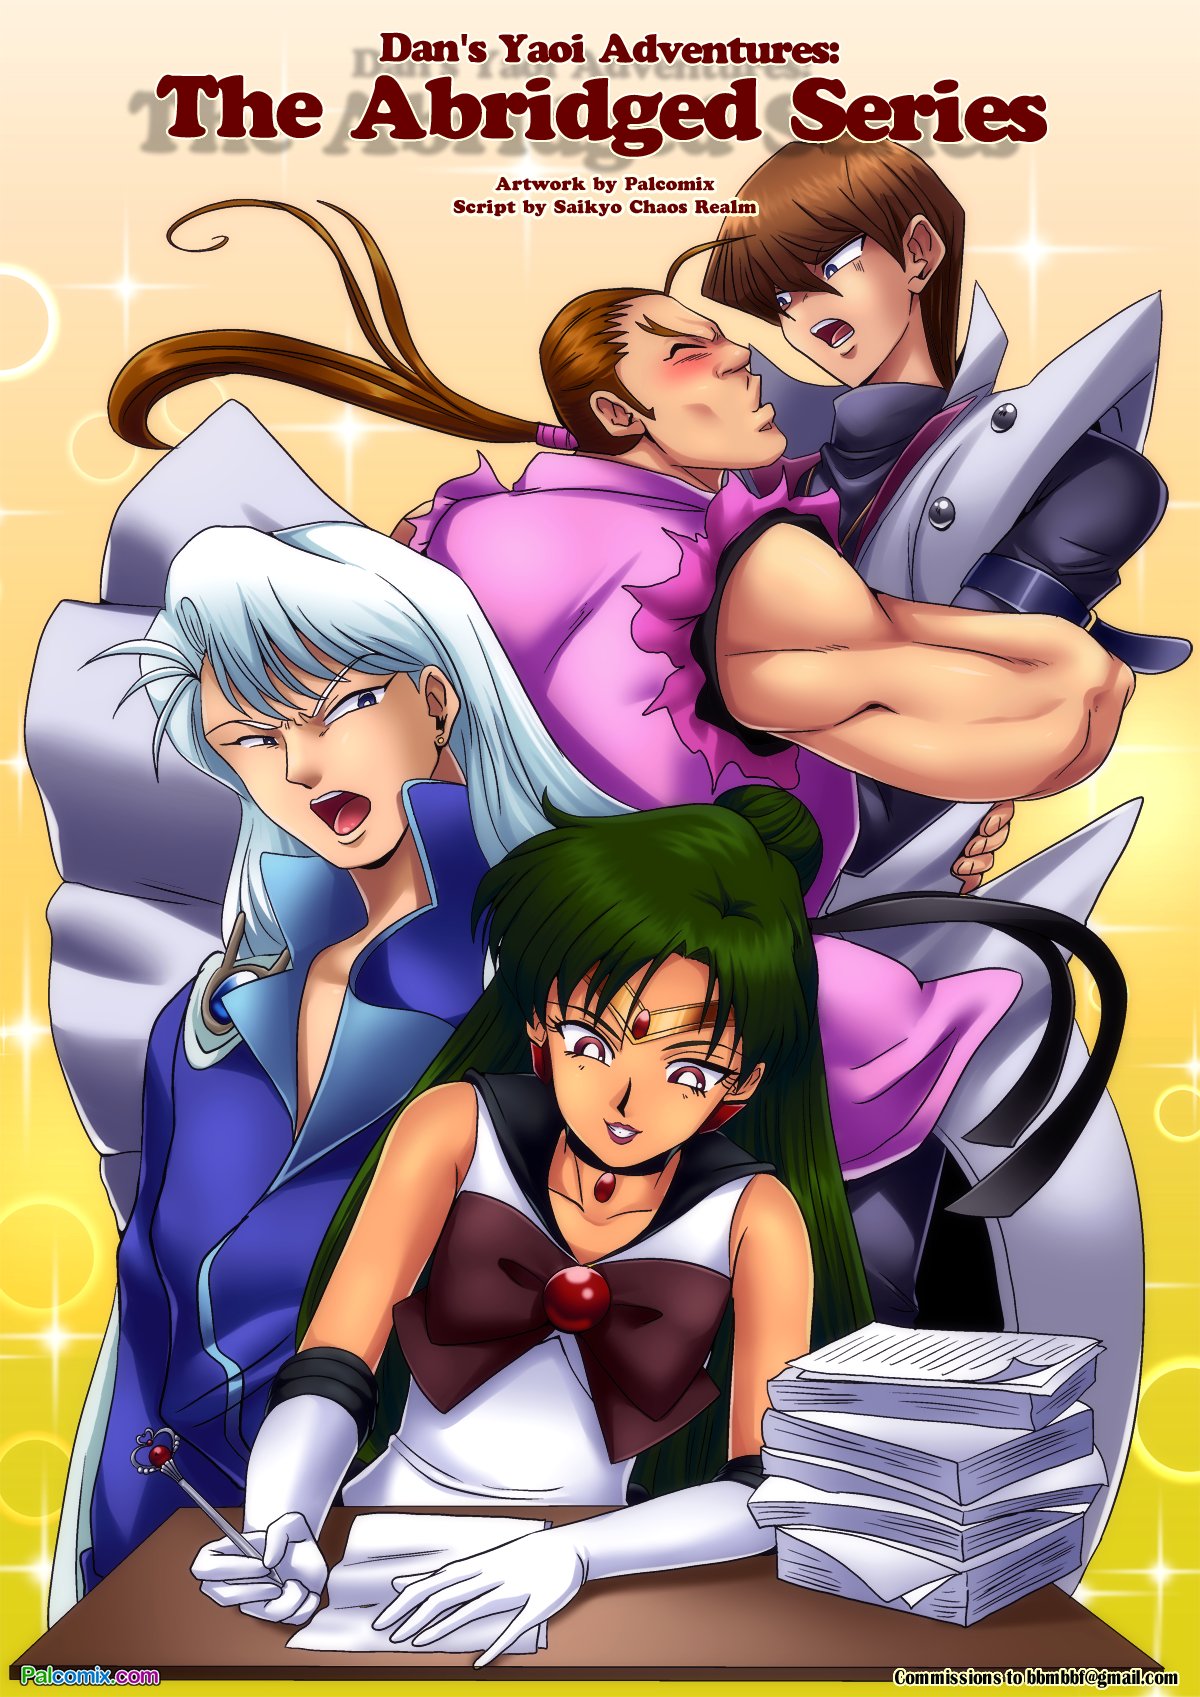 SureFap xxx porno Street Fighter - [Palcomix] - Street Fighter (with Some Sailor Moon) - Vega vs Chun Li #3 - Dan's Yaoi Adventures: The Abridged Series